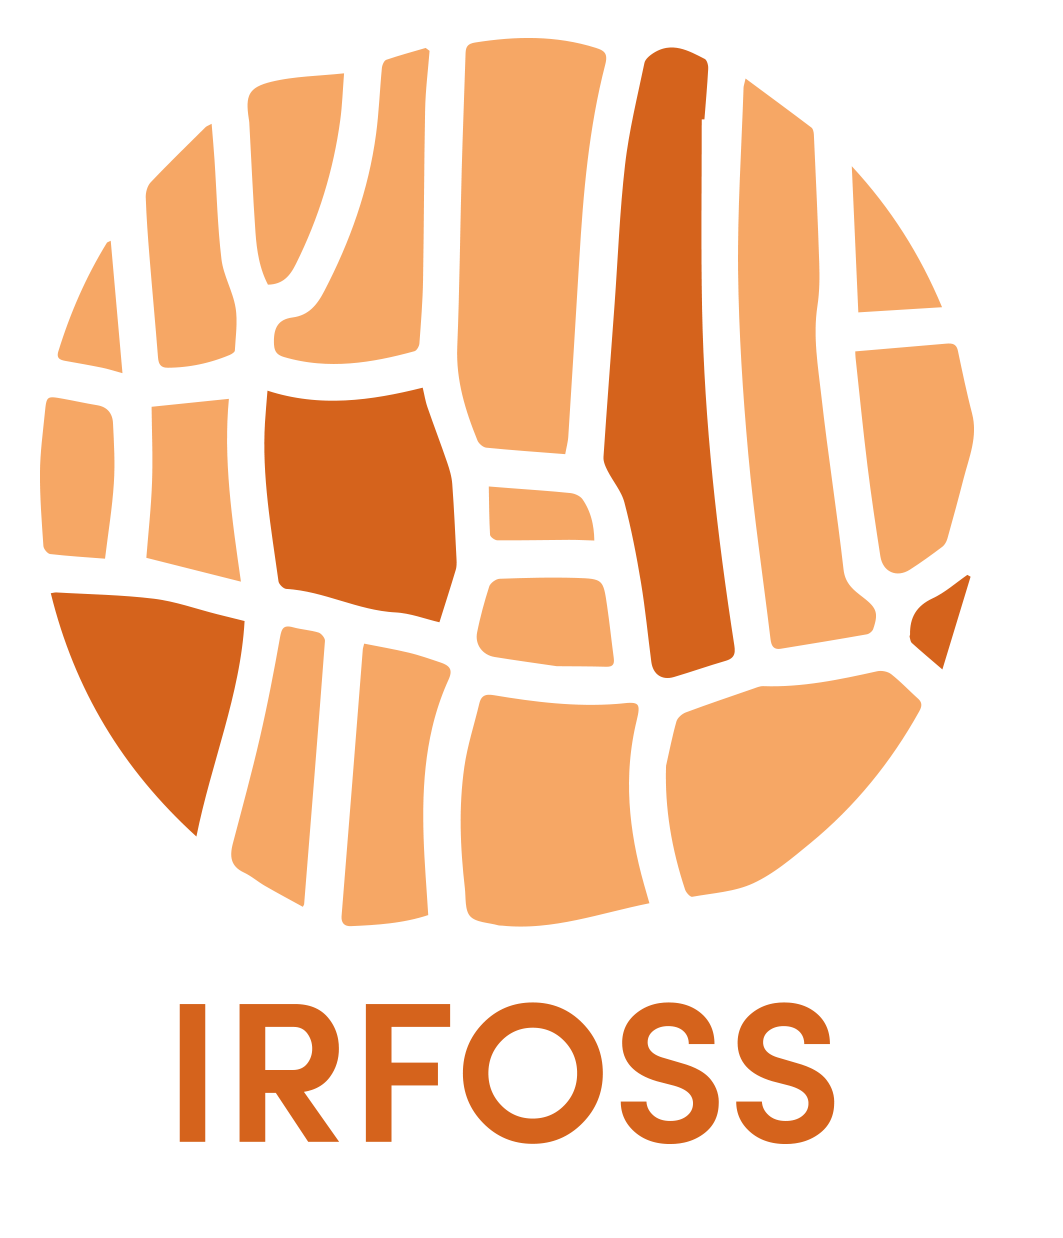 www.irfoss.com